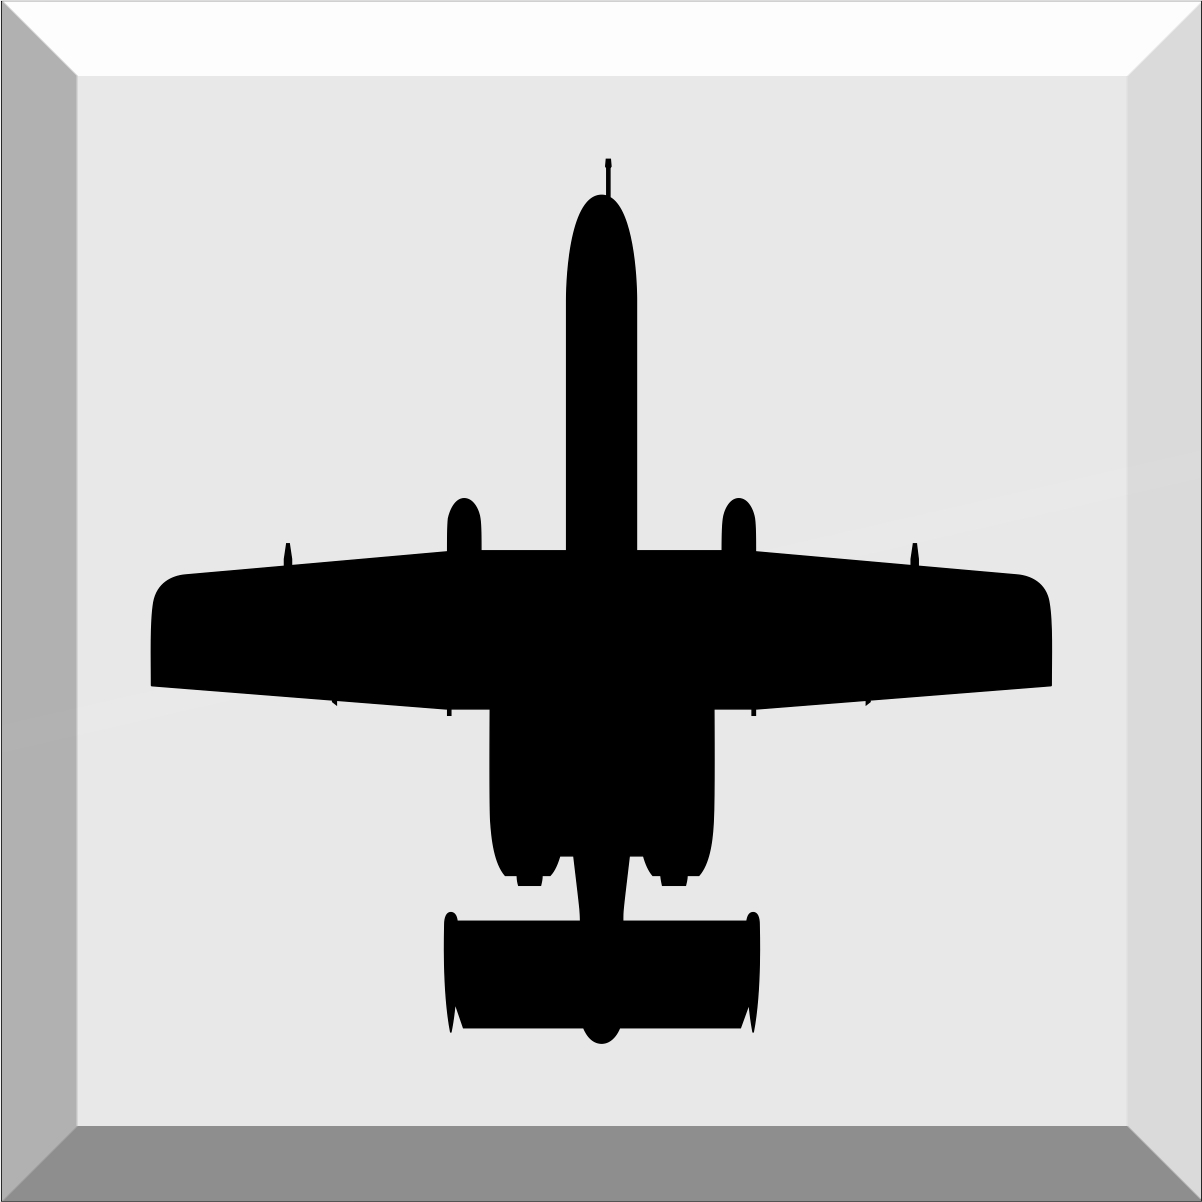 Fairchild Republic A-10 Thunderbolt II Single-Seat Twin Turbofan Engine Can...